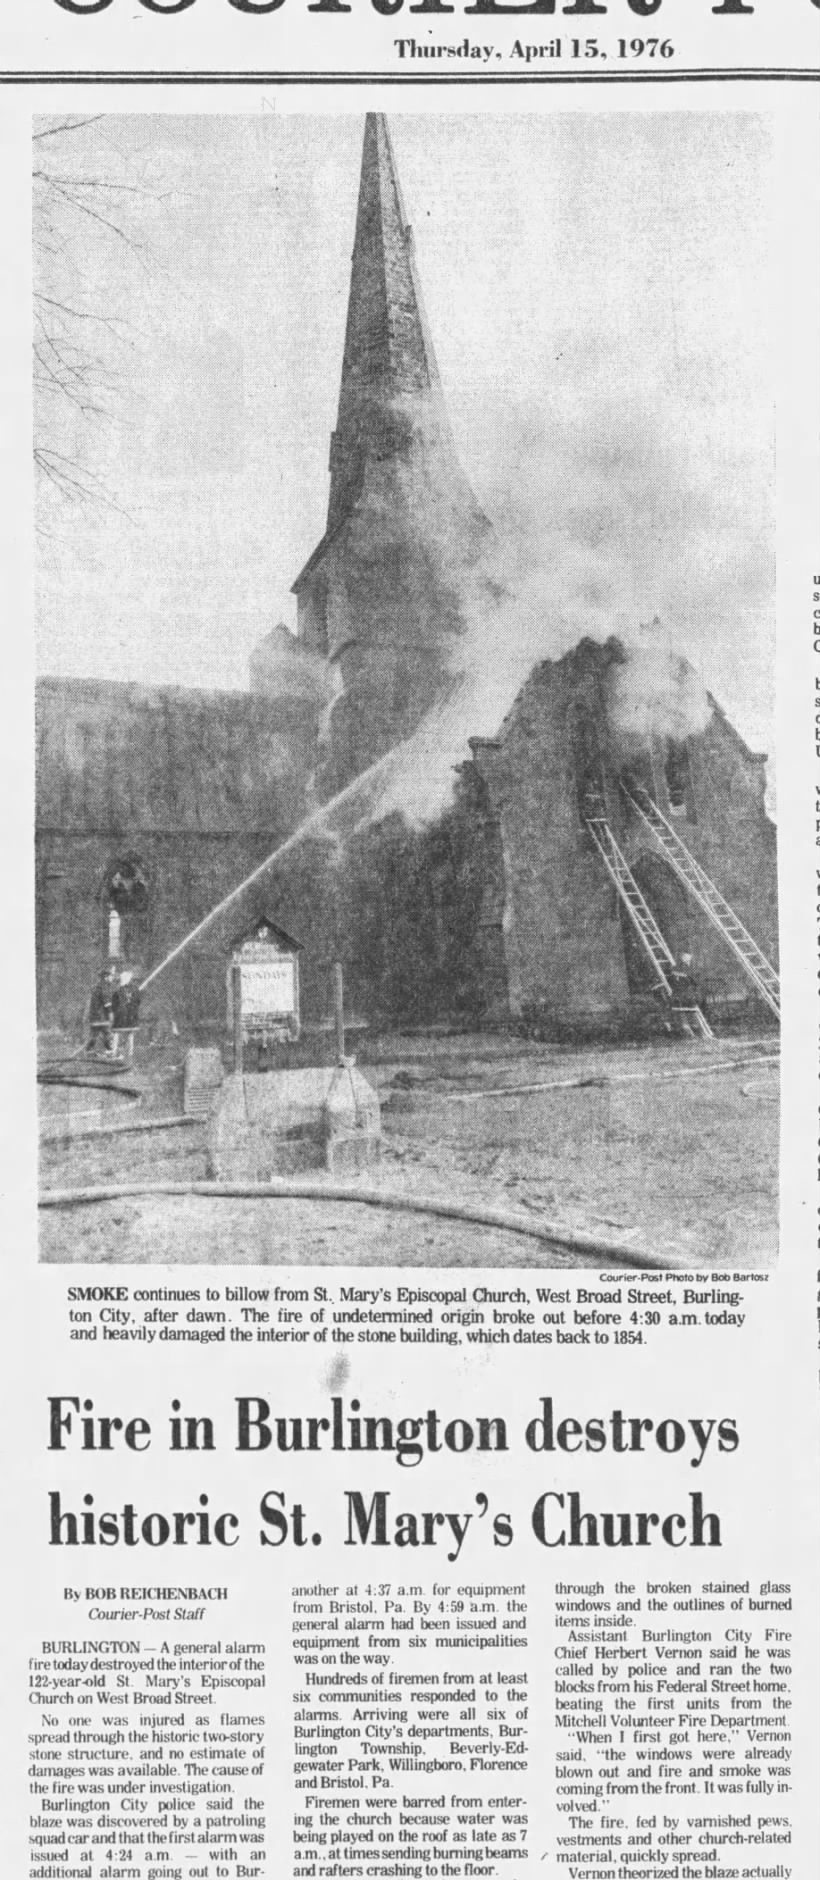 1976 Fire Guts St. Mary’s Church in Burlington NJ